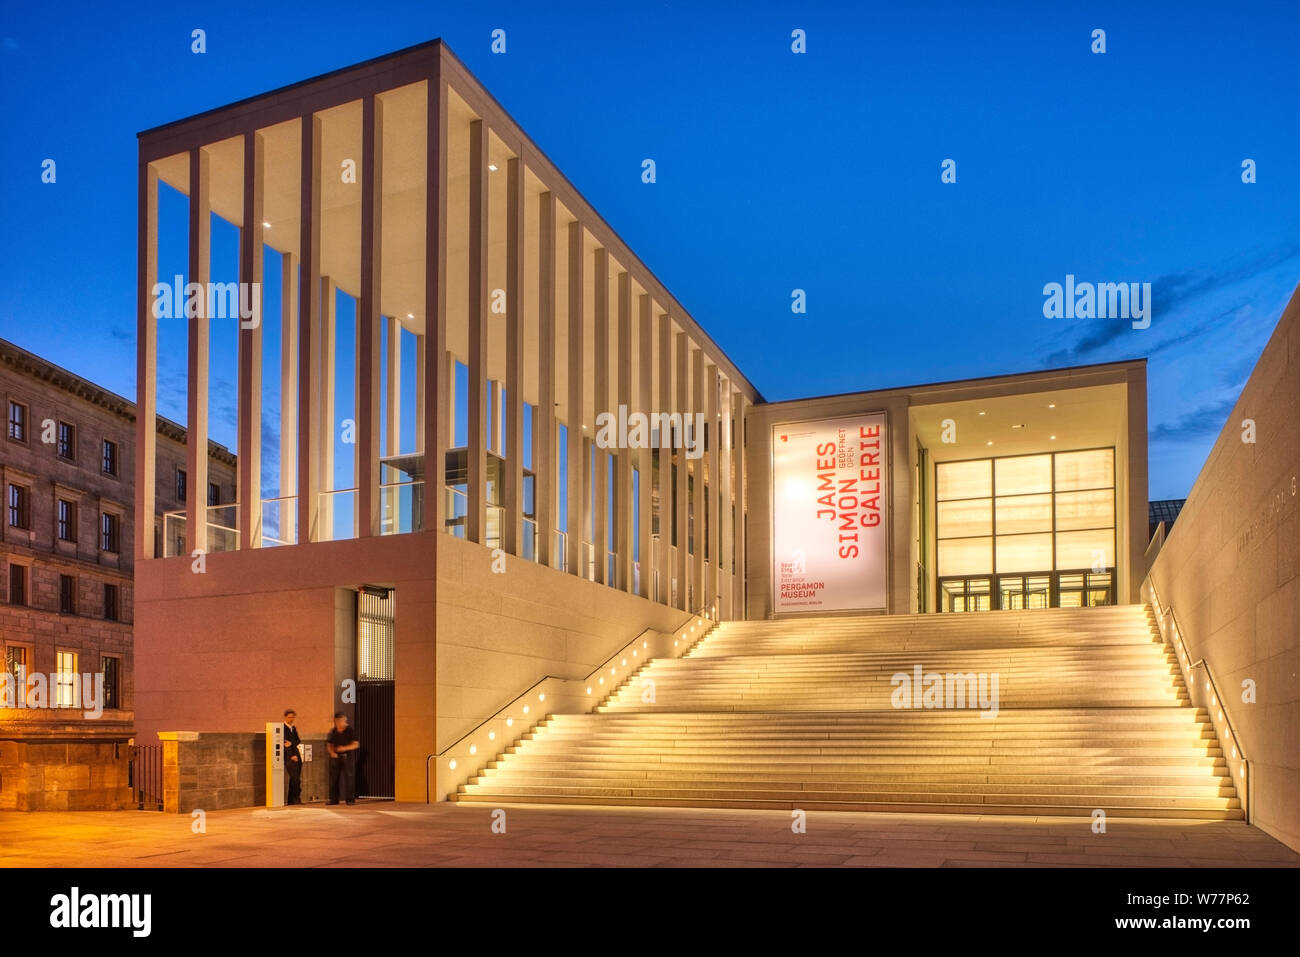 James Simon Gallery, David Chipperfield Architects, Neues Museum, Pergamon Museum, Museum Island, Berlin Mitte, Berlin, Germany Stock Photo